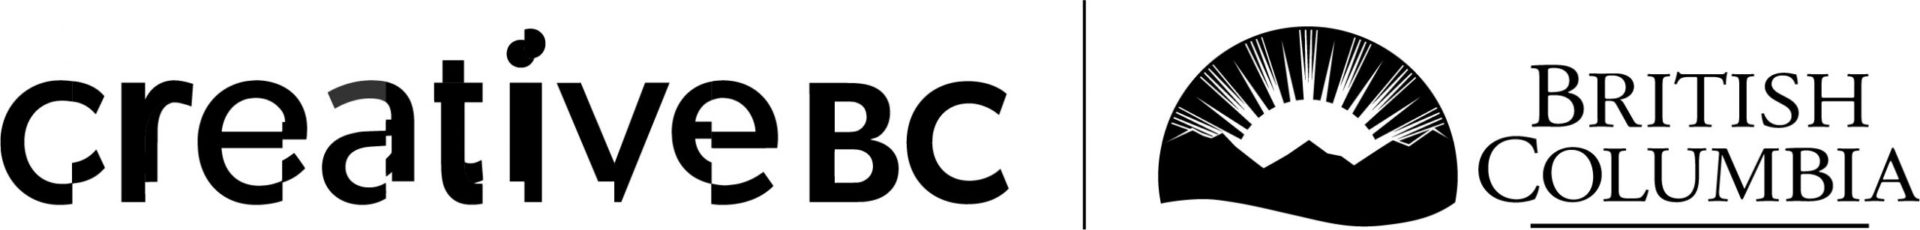 creative bc logo